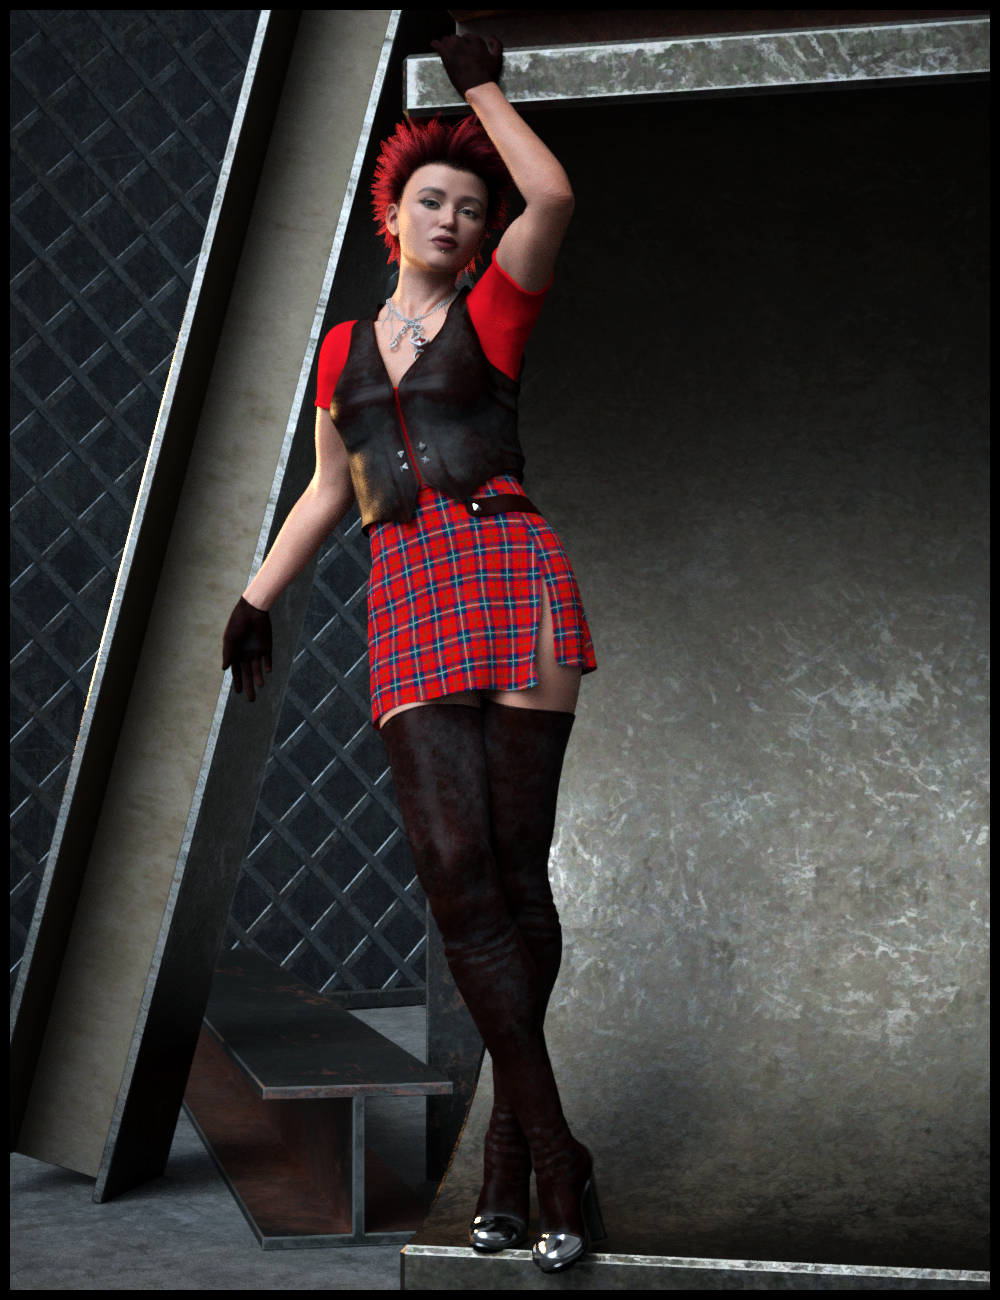 red skirt outfit 3d,idardarjisamaj.com